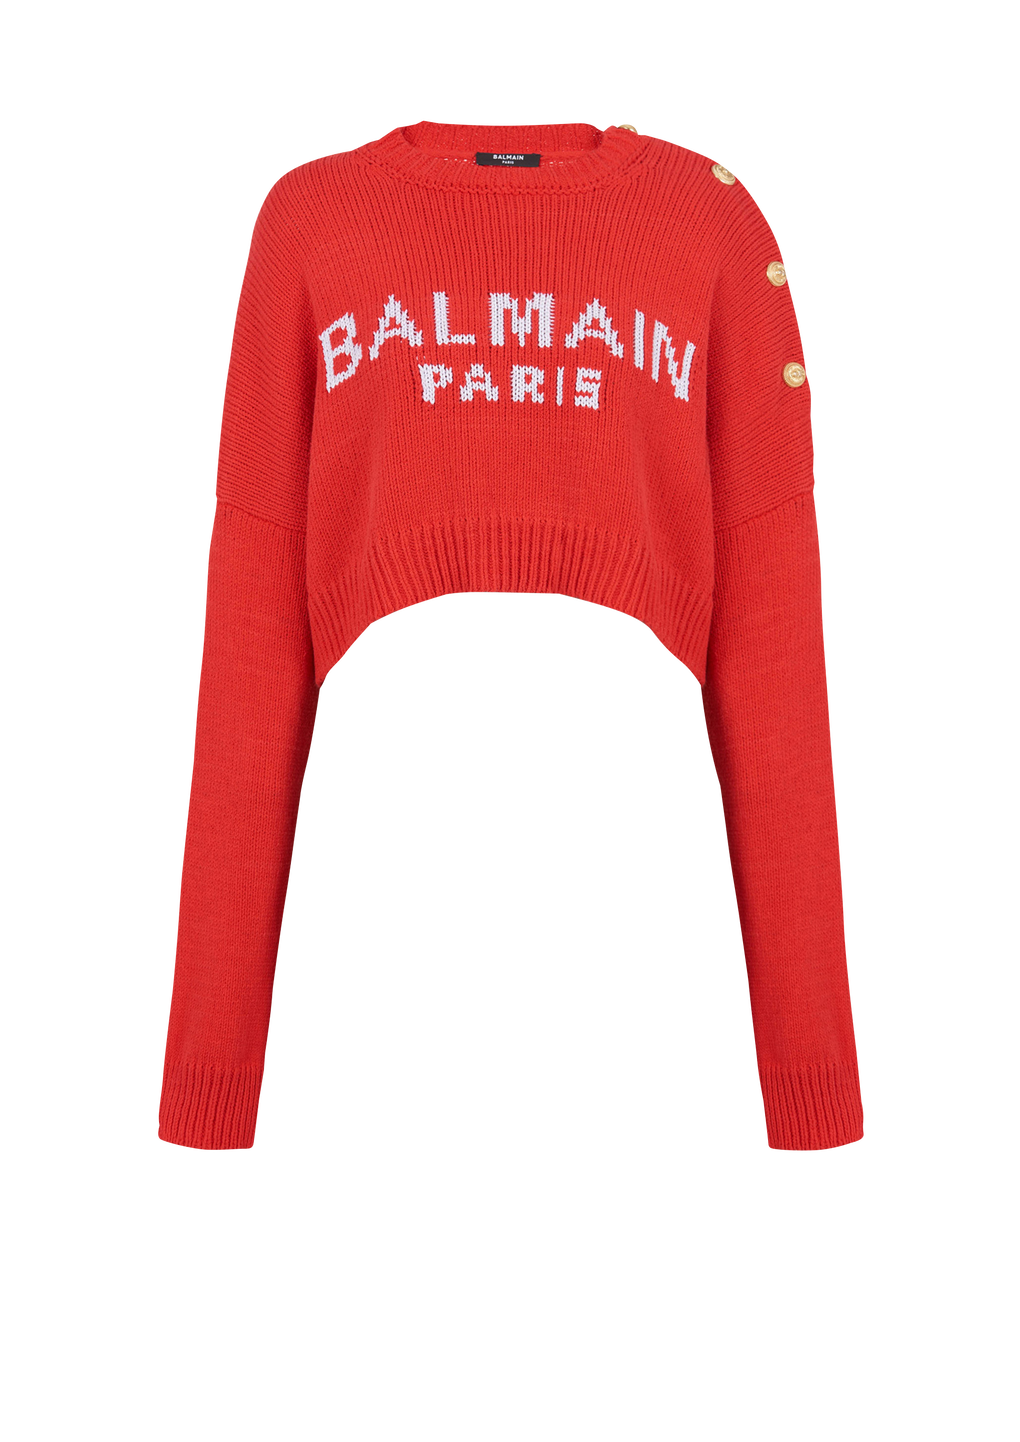 HIGH SUMMER CAPSULE - Pull court en maille avec logo Balmain, rouge, hi-res